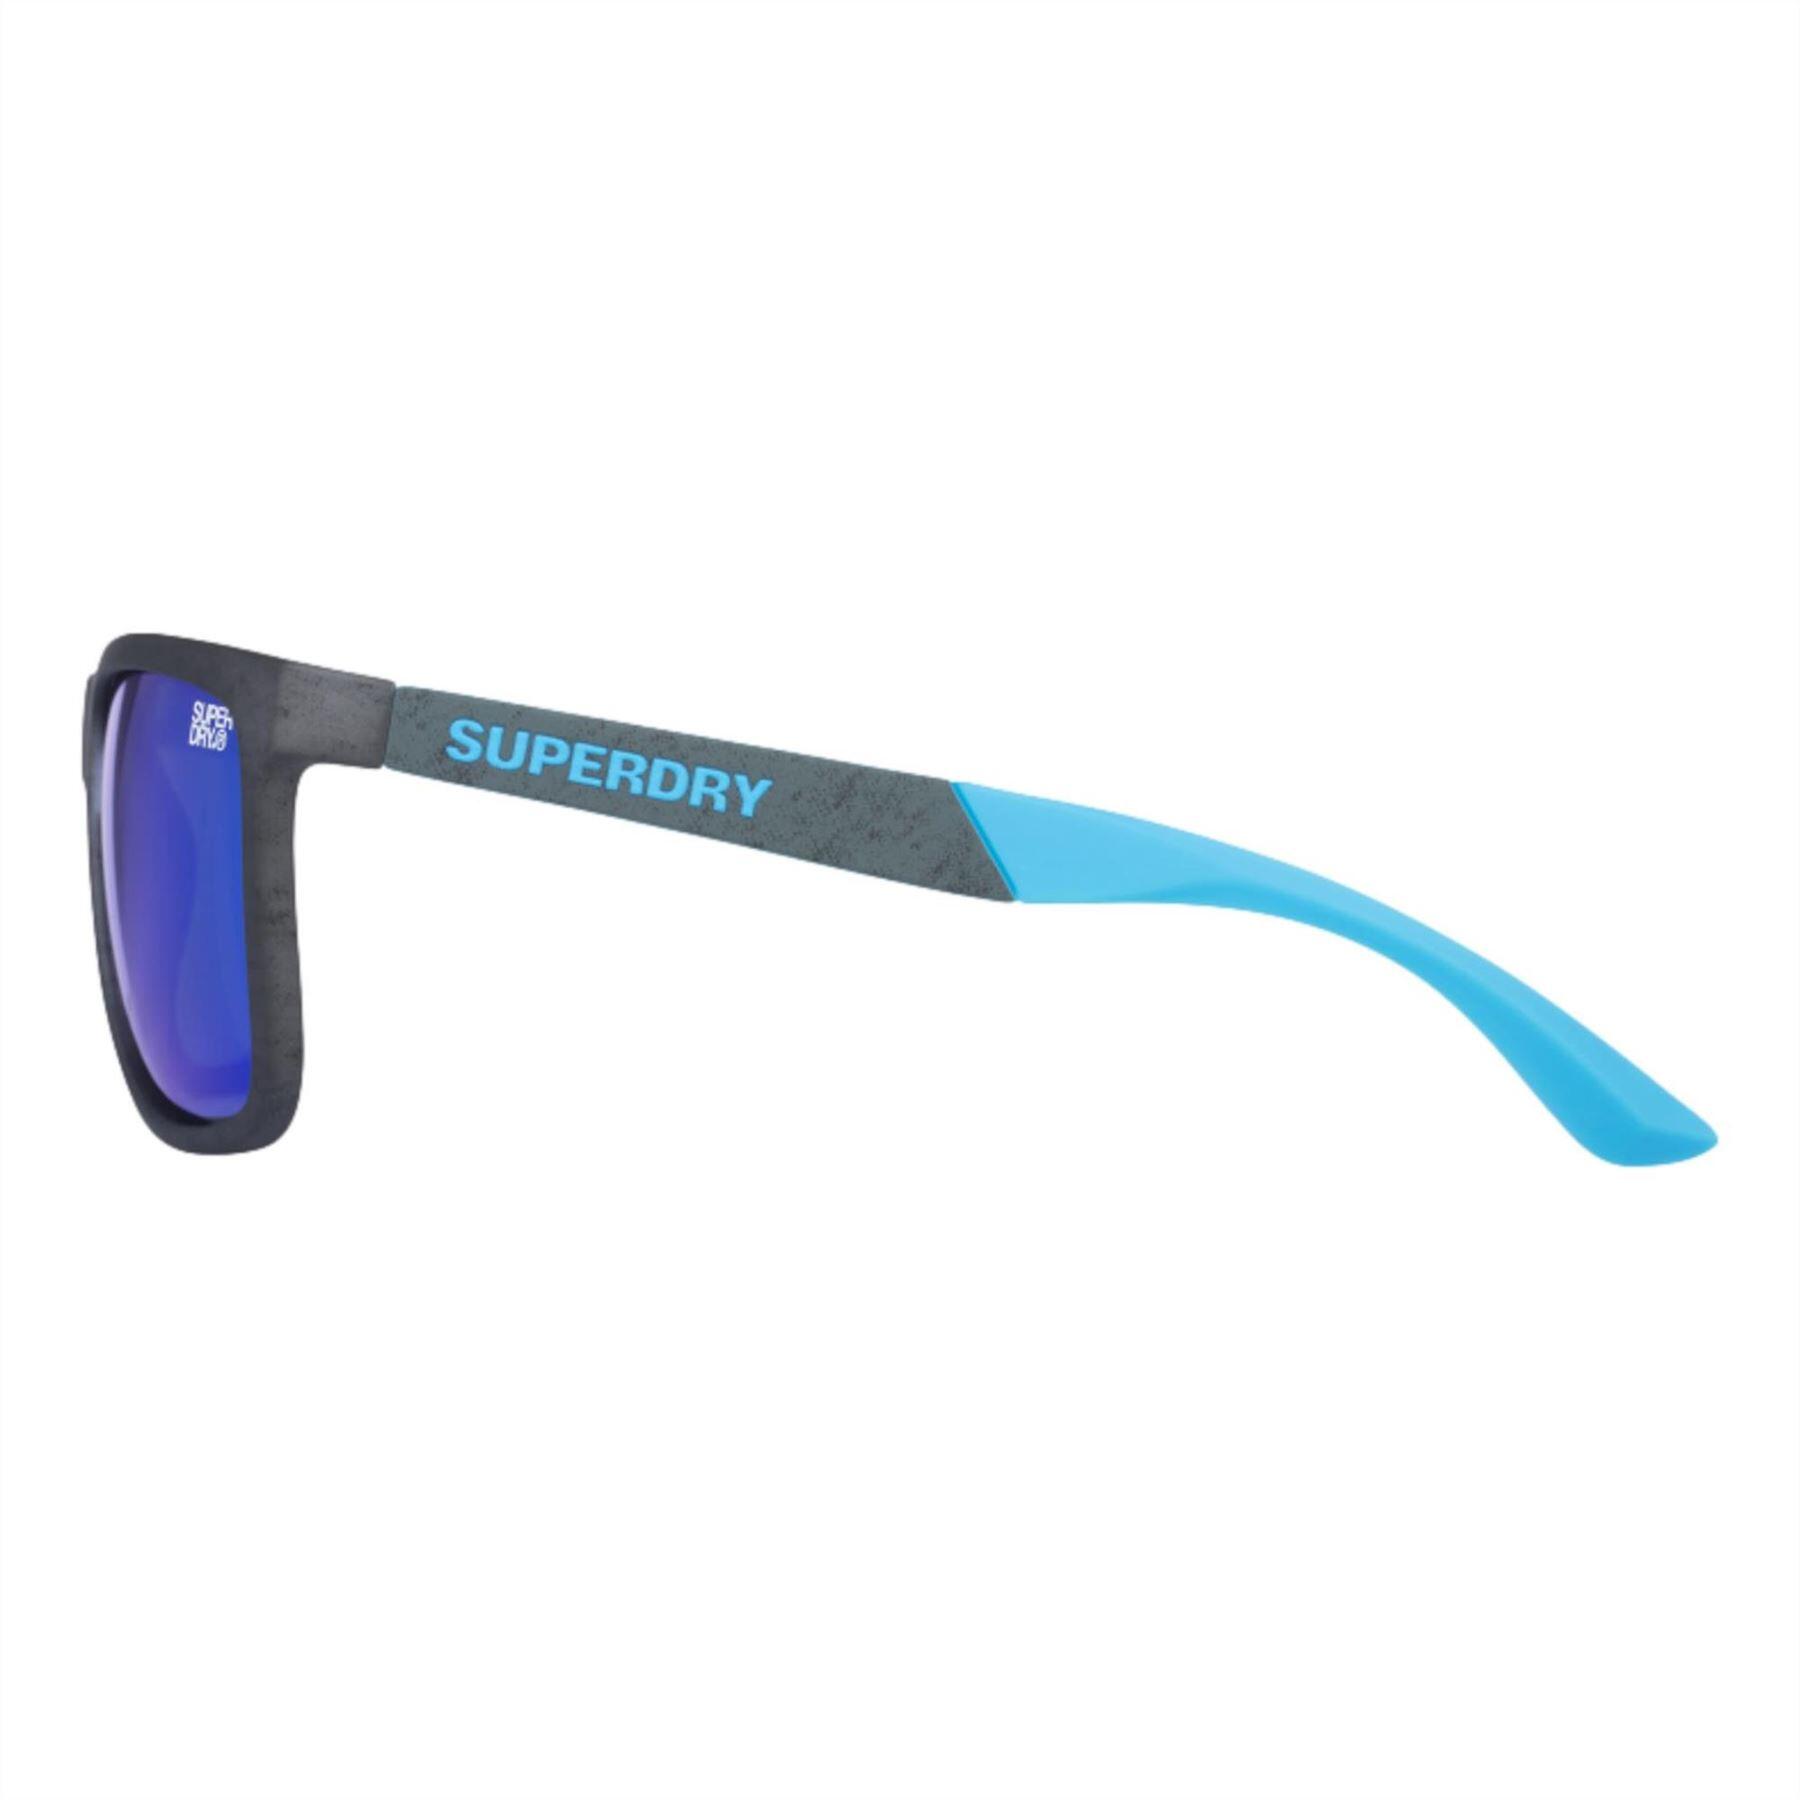 SUPERDRY Superdry Runner X Sunglasses - Marl Blue